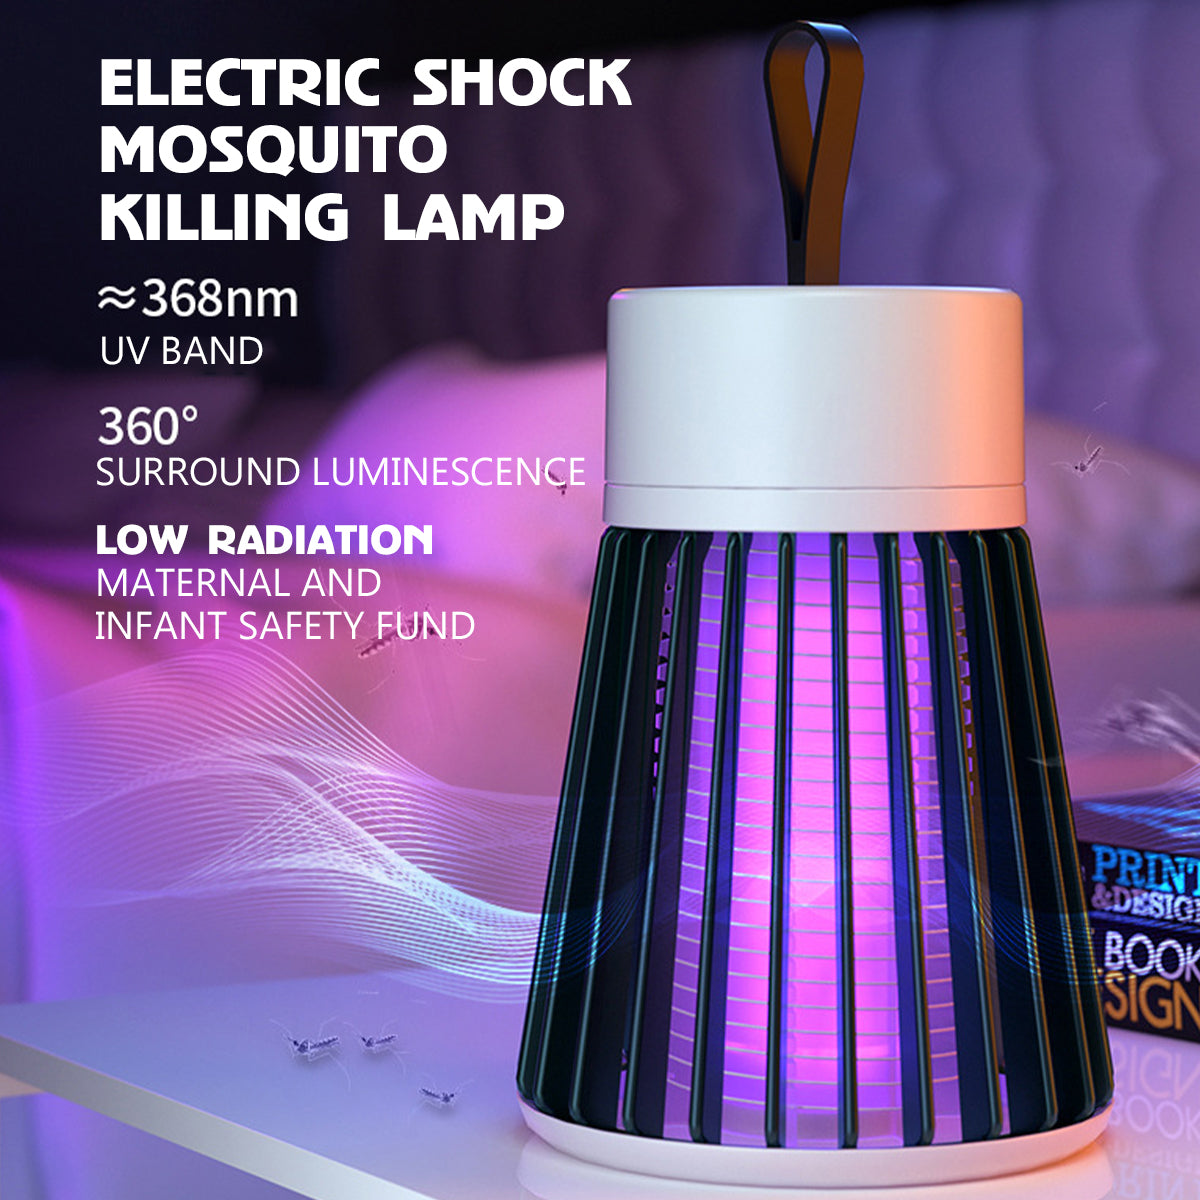 Electric-shock Mosquito Killer Lamp